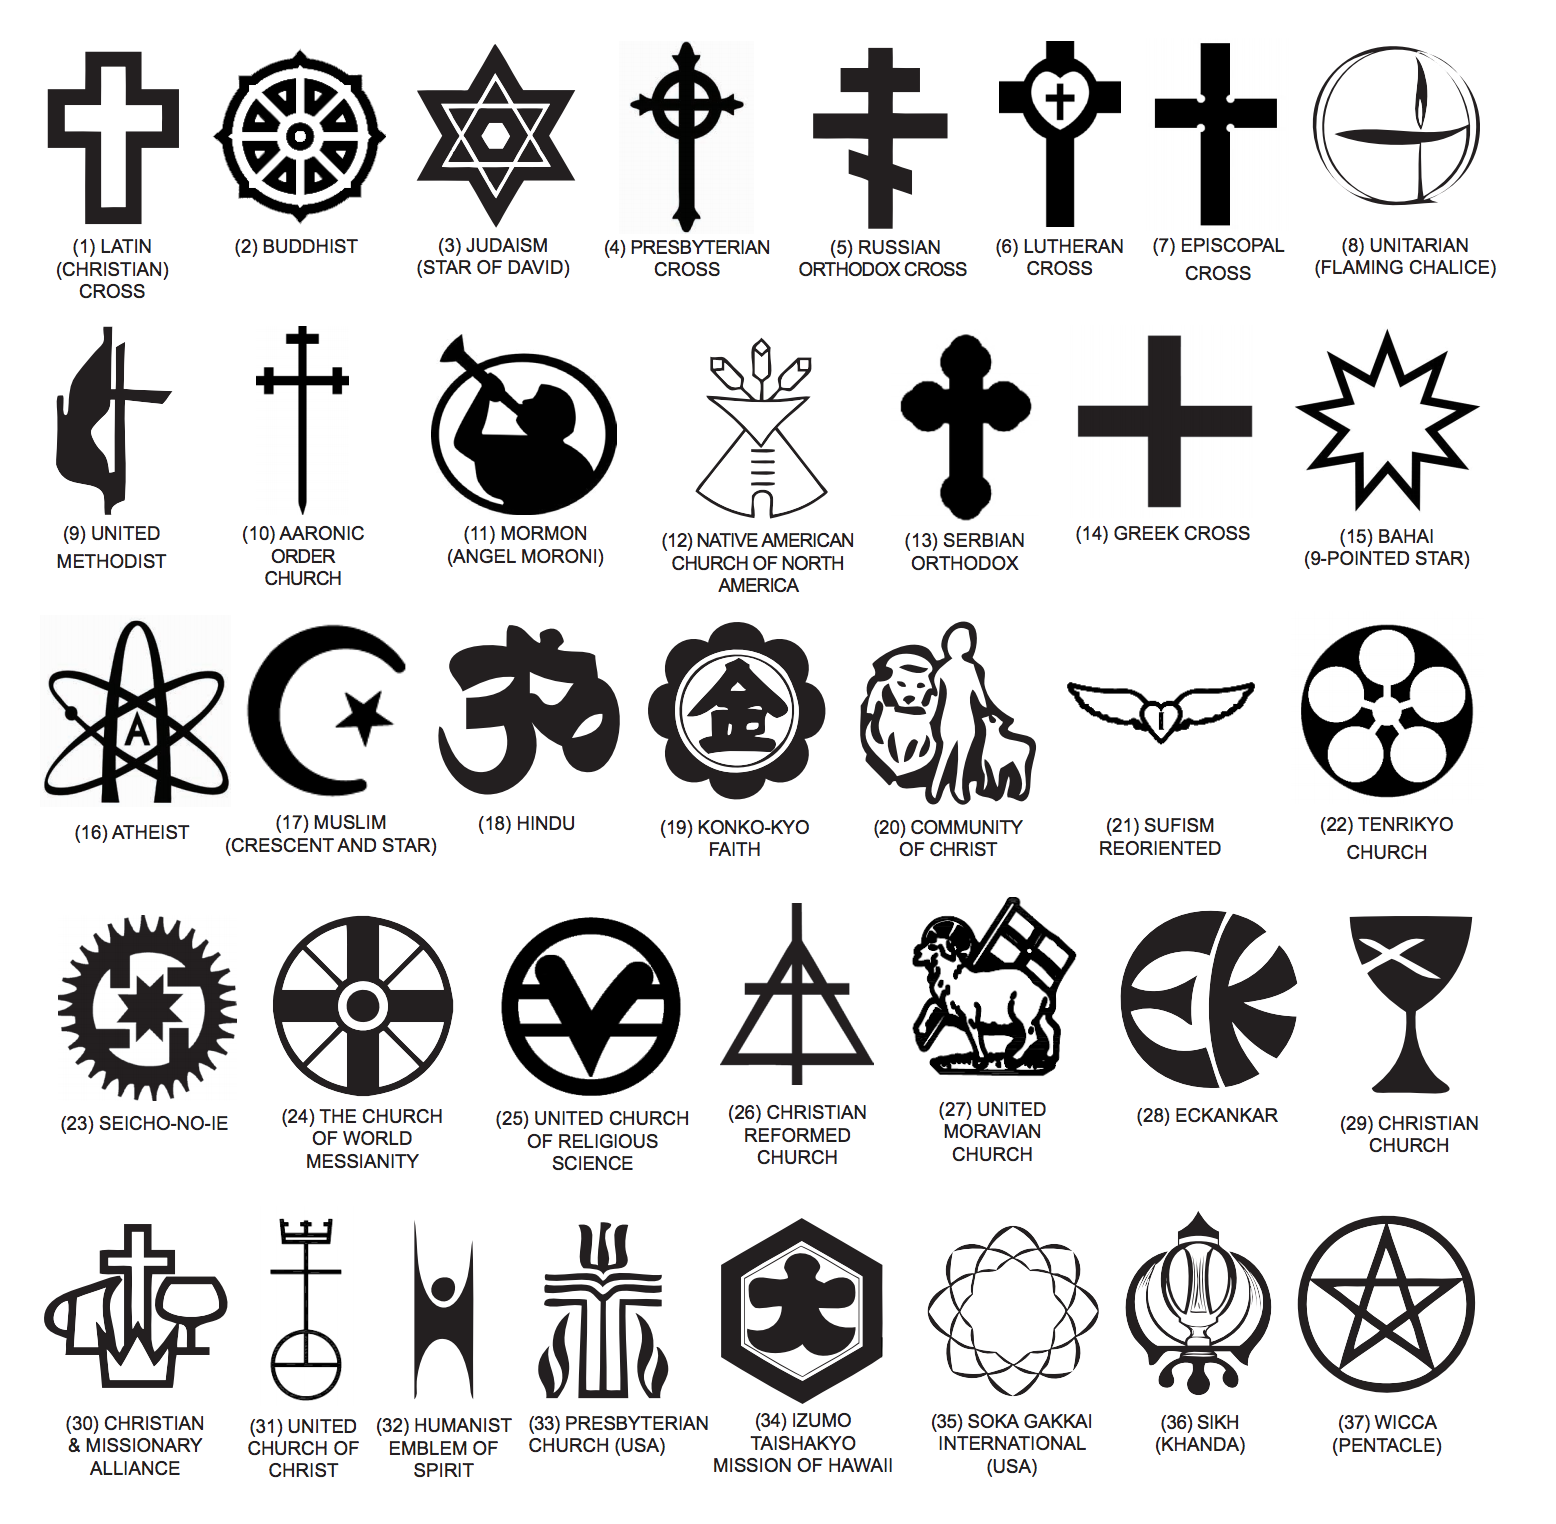 The 66 religious symbols the VA will put on tombstones